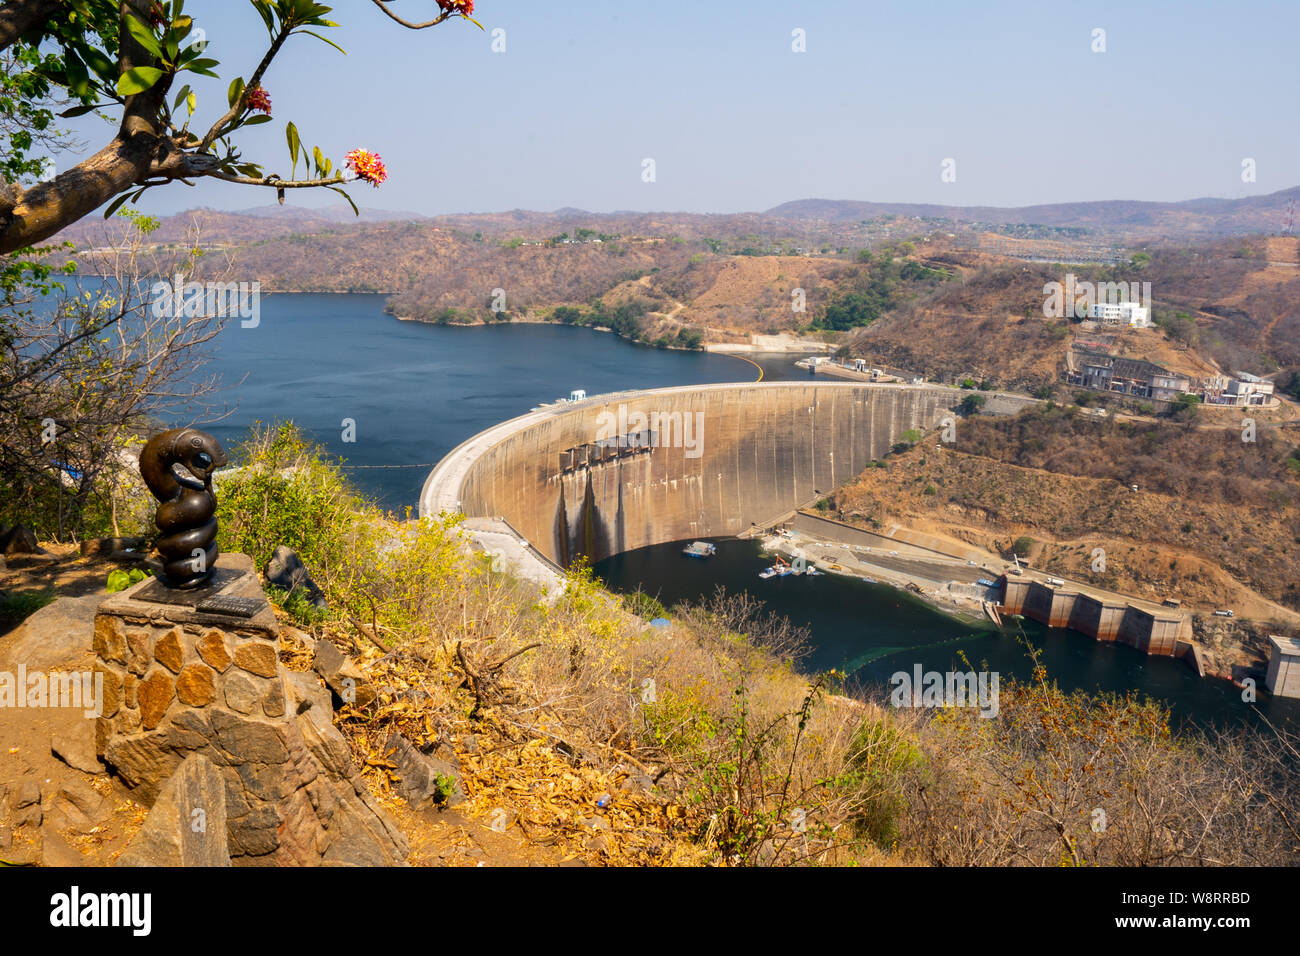 View of the Kariba hydroelectric dam in the Kariba gorge of the Zambezi river between Zimbabwe and Zambia in southern Africa. The dam forms lake Karib Stock Photo